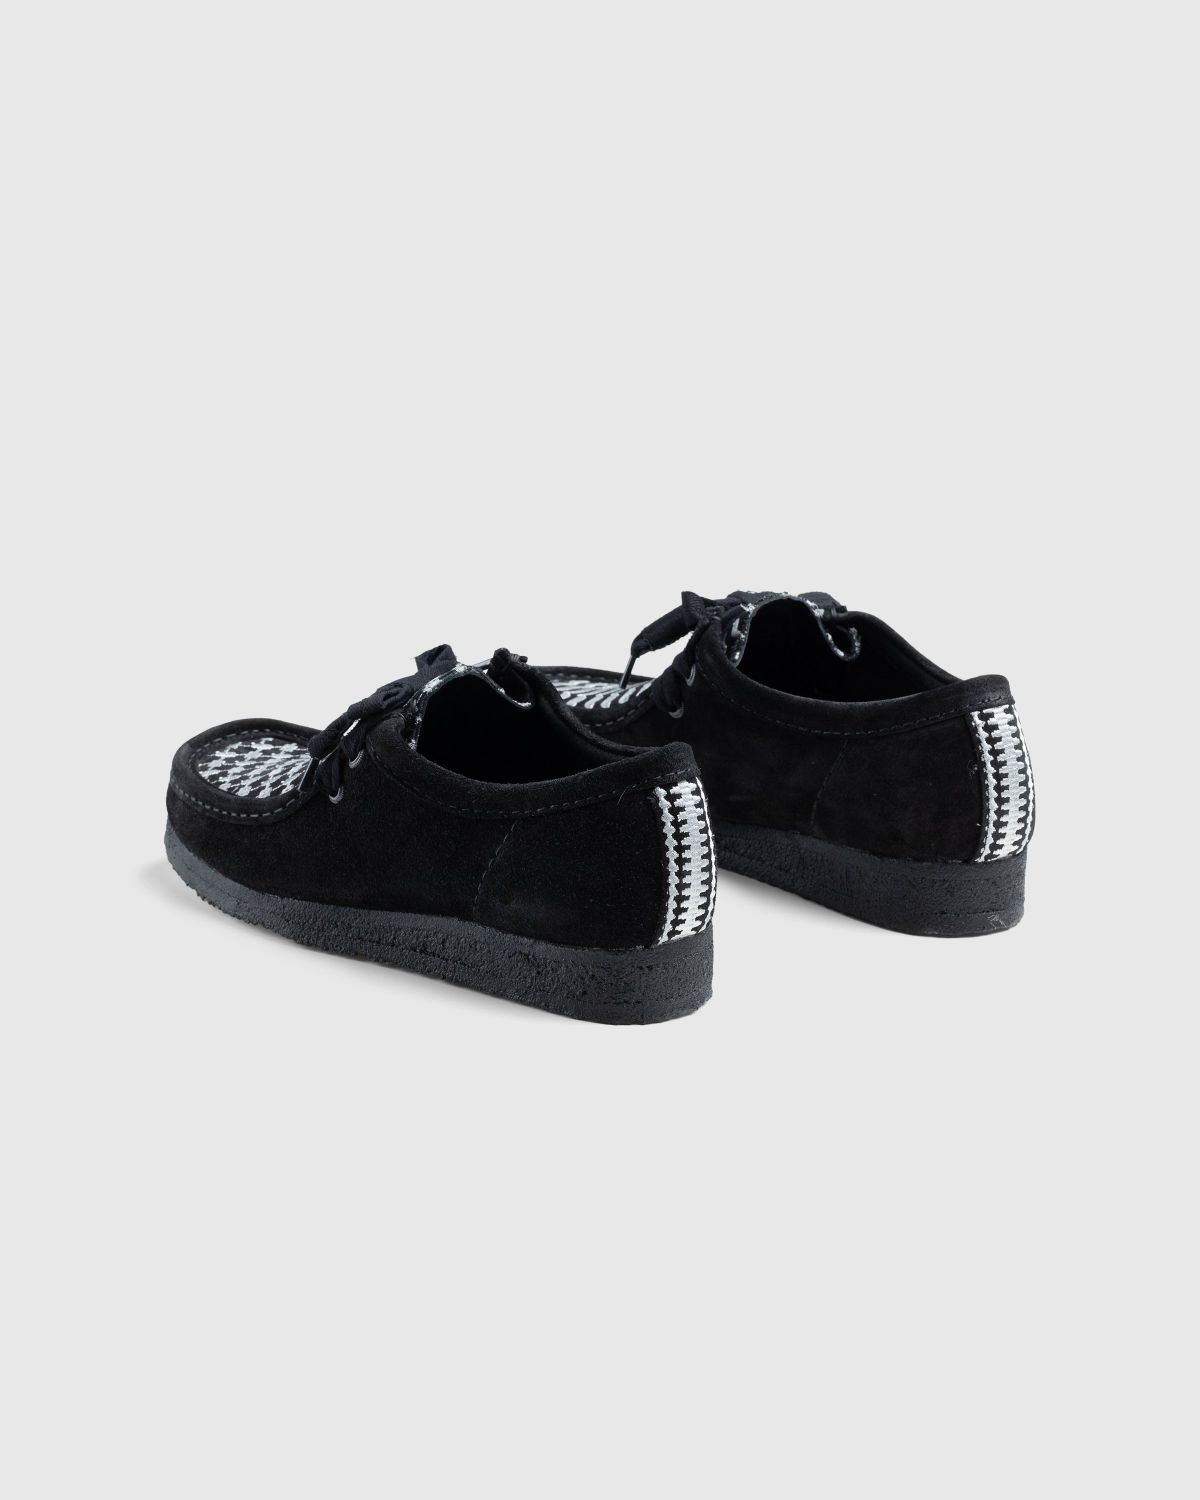 Clarks Originals x Slam Jam – Wallabee Black - Boat Shoes & Moccasins - Black - Image 4